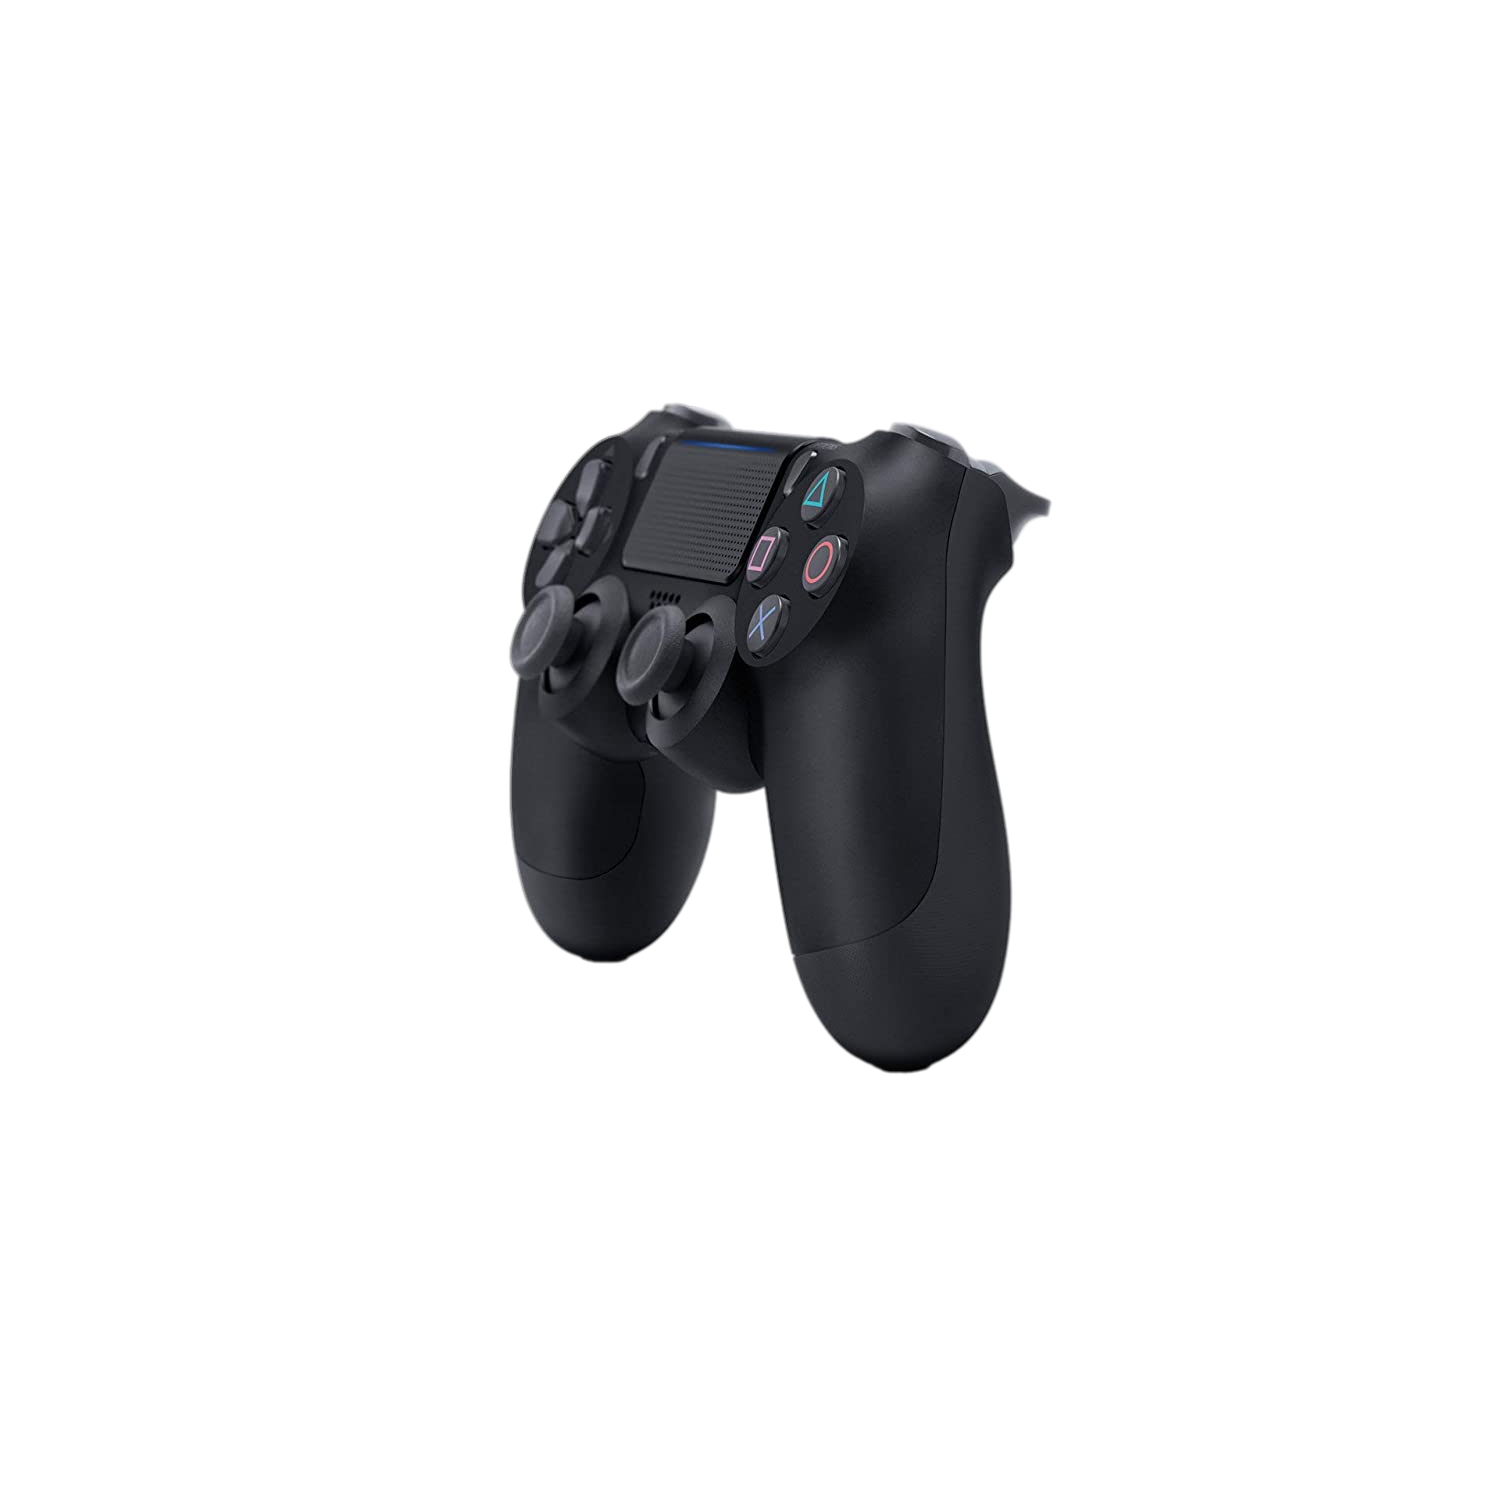 Sony-Official-PlayStation-DualShock-4-Controller-Black-3_d84e06ae-ce33-4dd4-b55a-a6ea92e27493